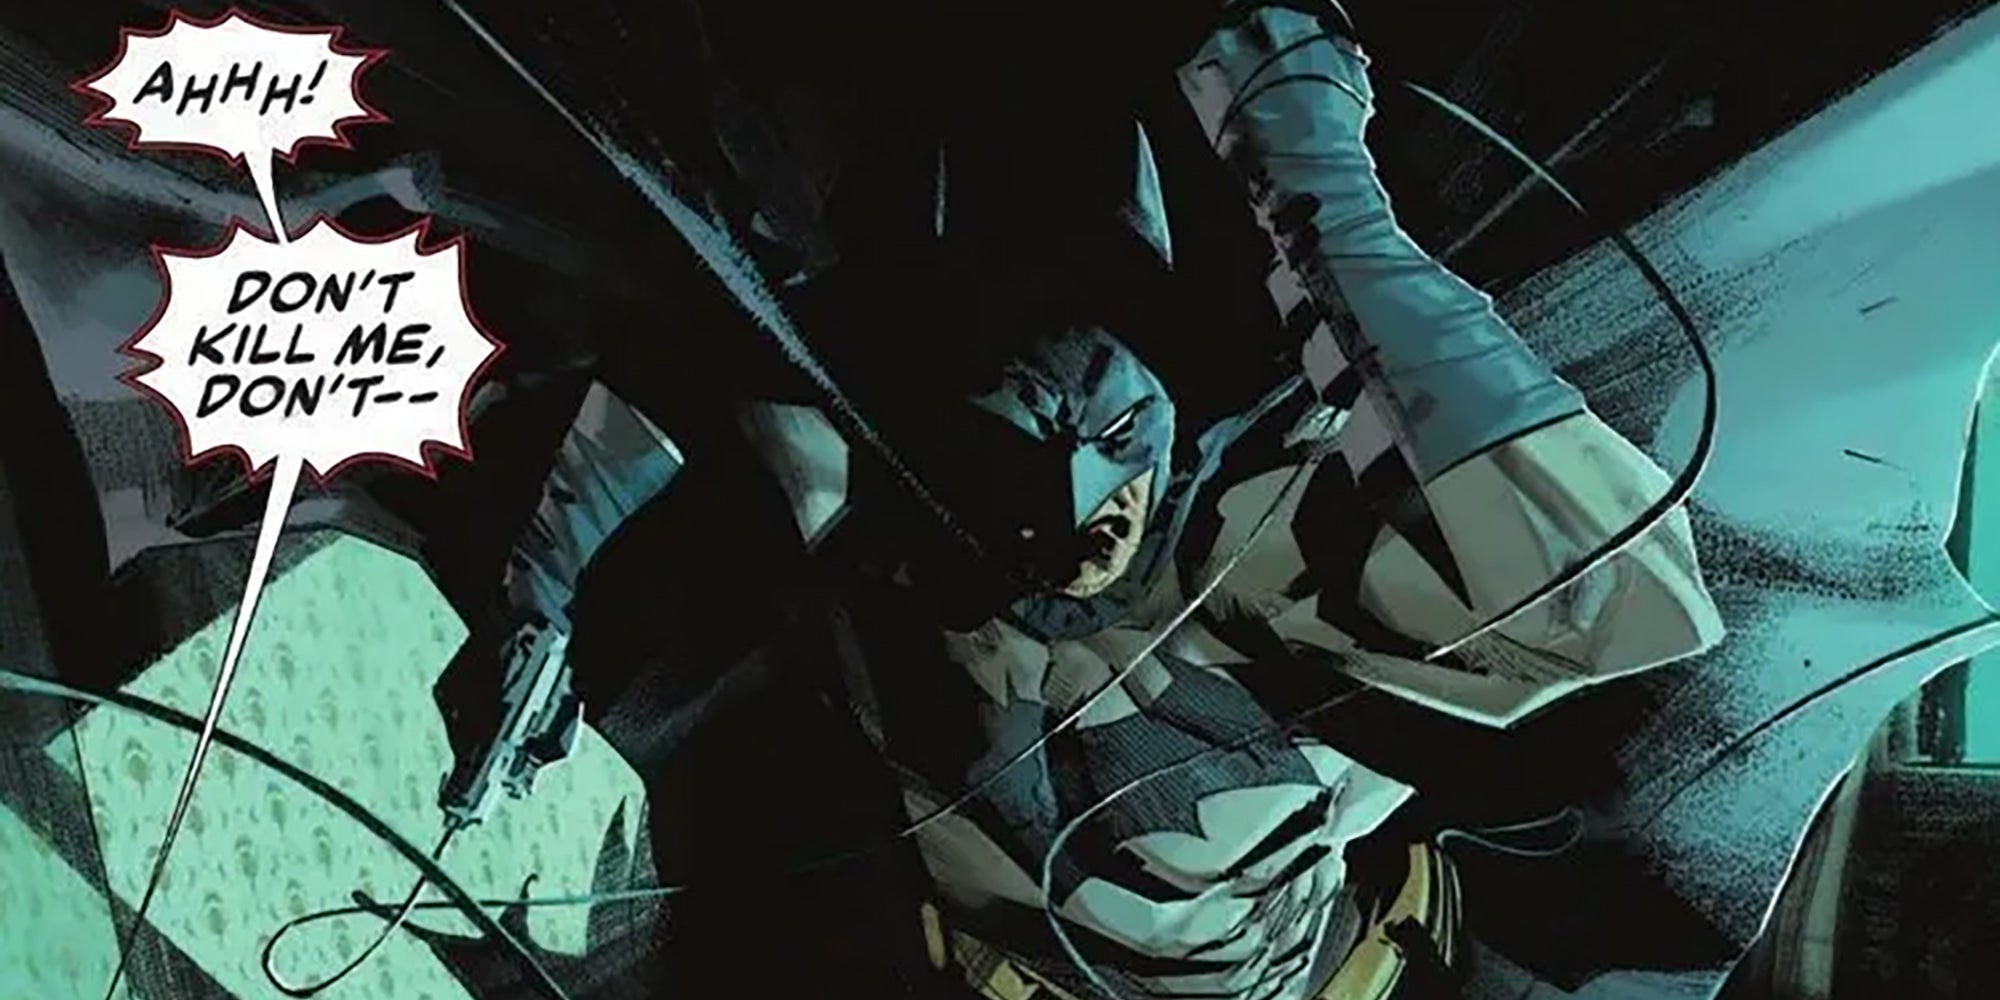 DC's Latest Batman era kicks off with a shocking death... or does it? |  Popverse